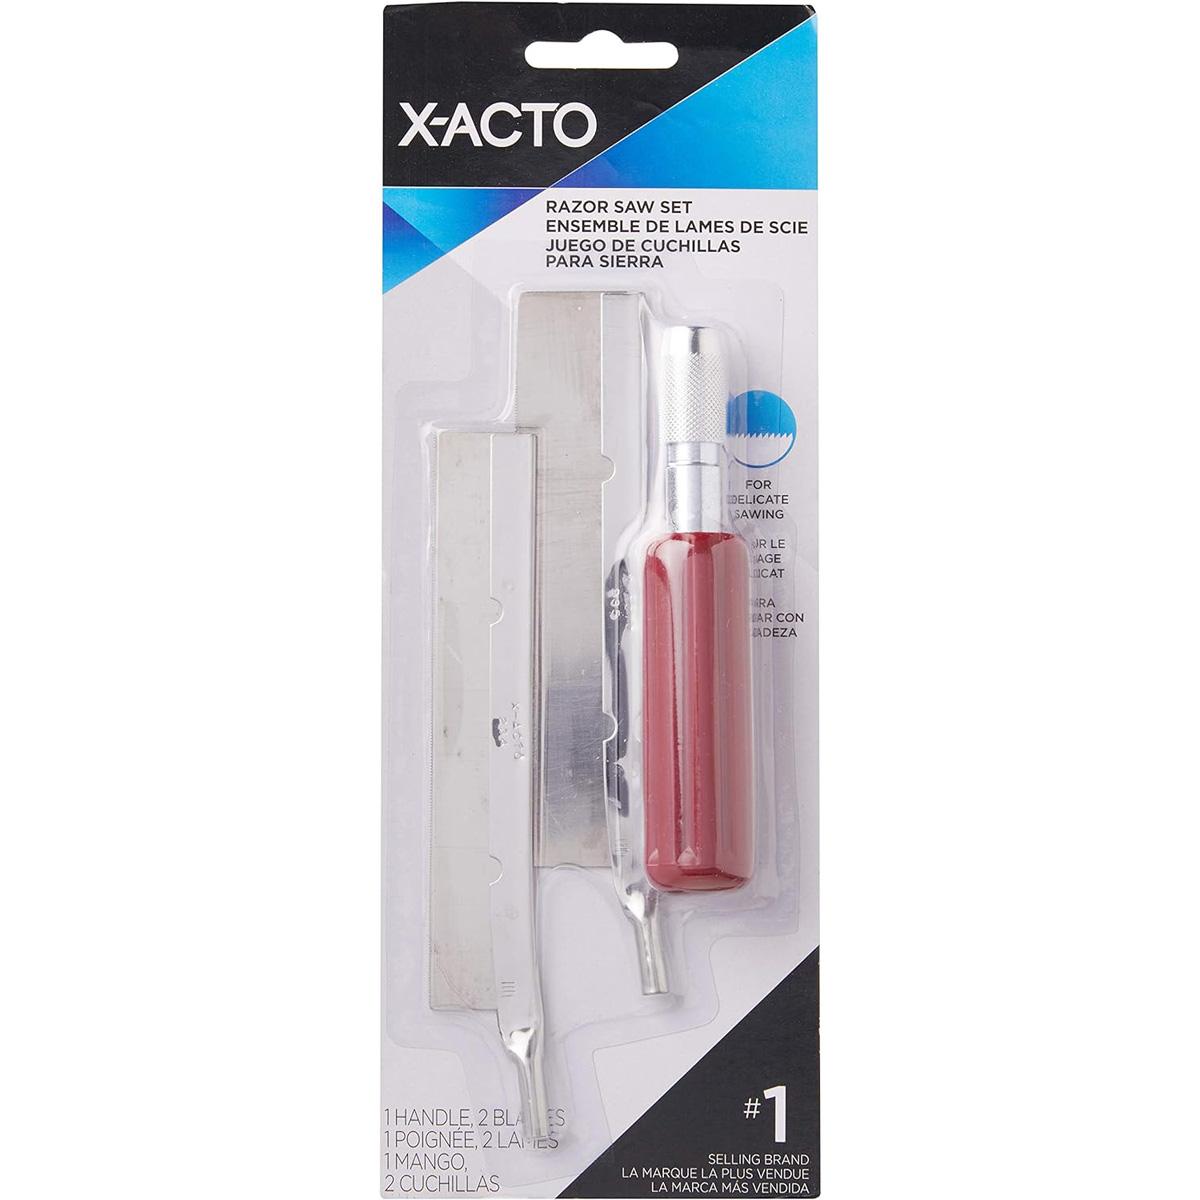 X-ACTO Precision Razor Saw Set for $7.33